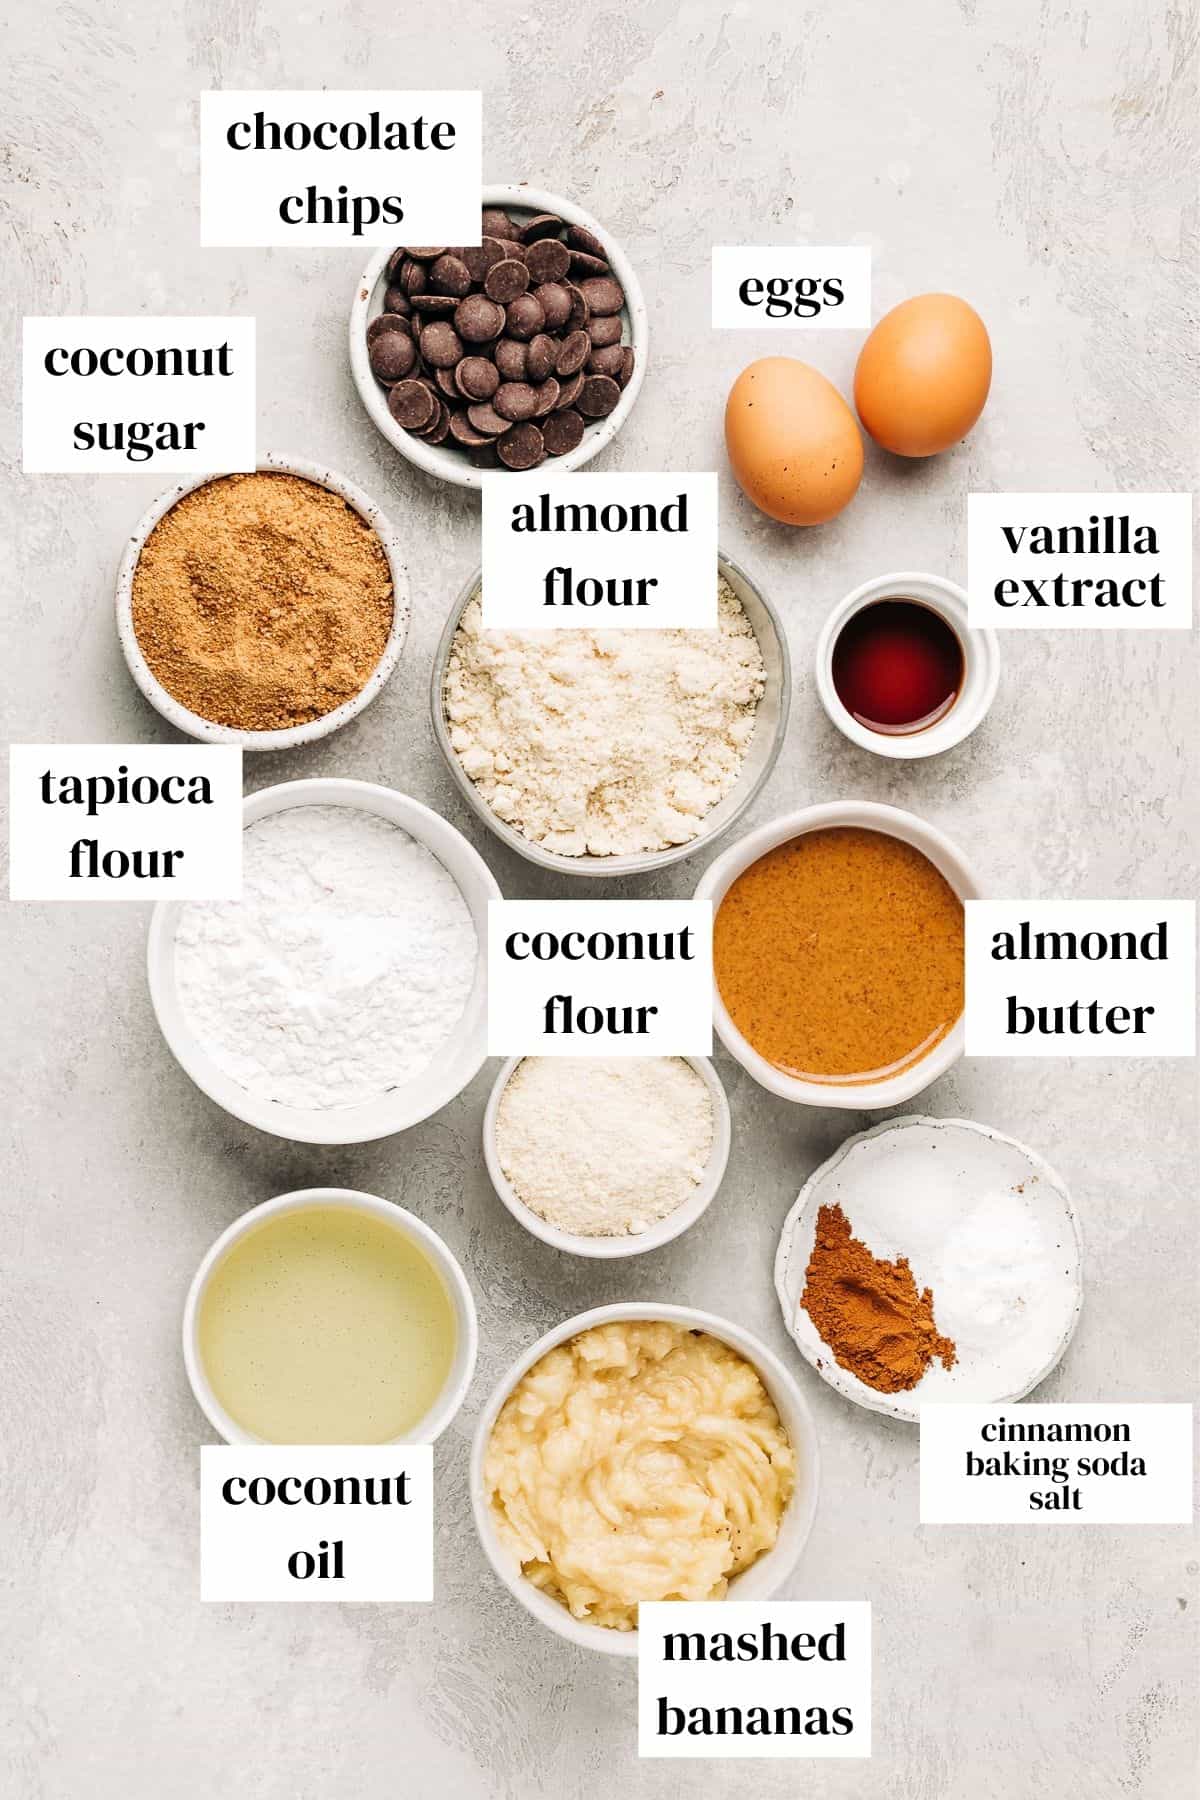 eggs, chocolate chips, vanilla, coconut sugar, almond flour, tapioca flour, coconut flour, almond butter, coconut oil, bananas, cinnamon, baking soda, and salt on a gray surface.